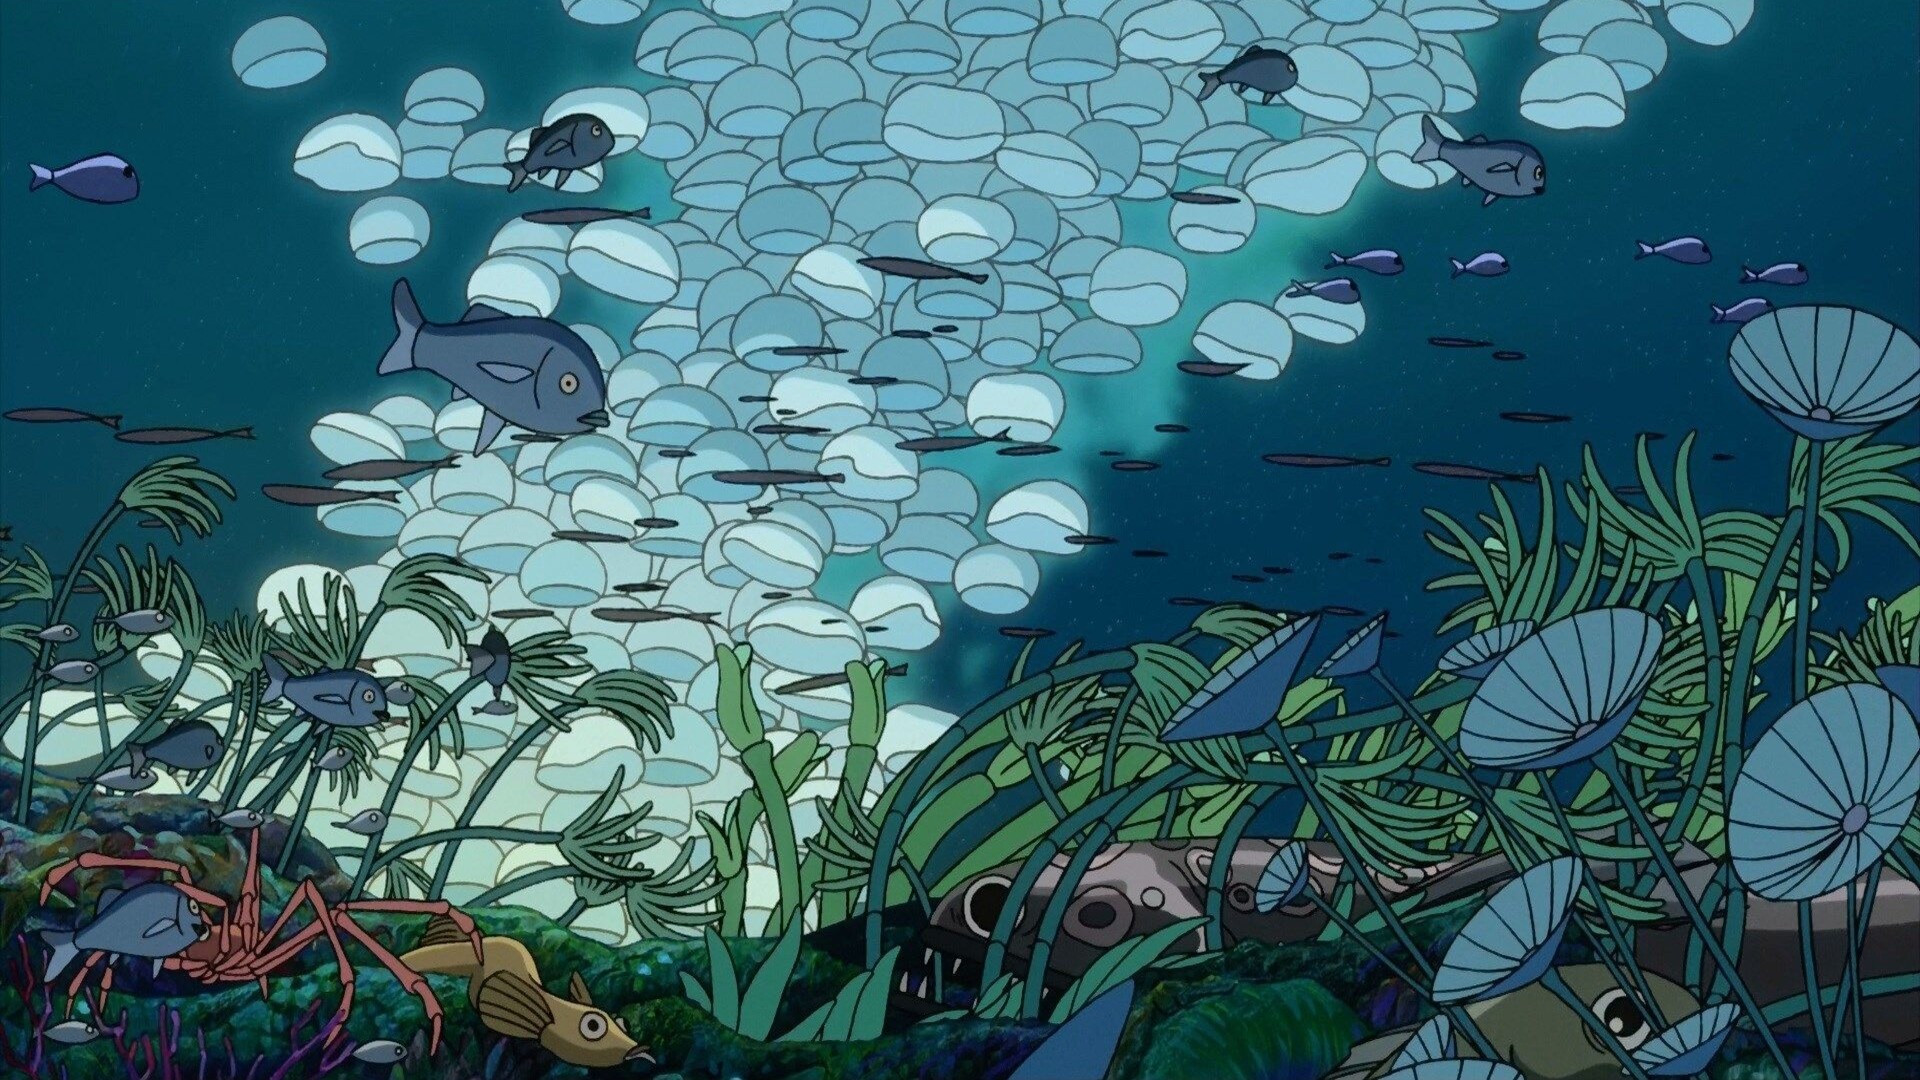 Studio Ghibli: Ponyo on the Cliff, The film tells the story of Ponyo, a goldfish. 1920x1080 Full HD Wallpaper.